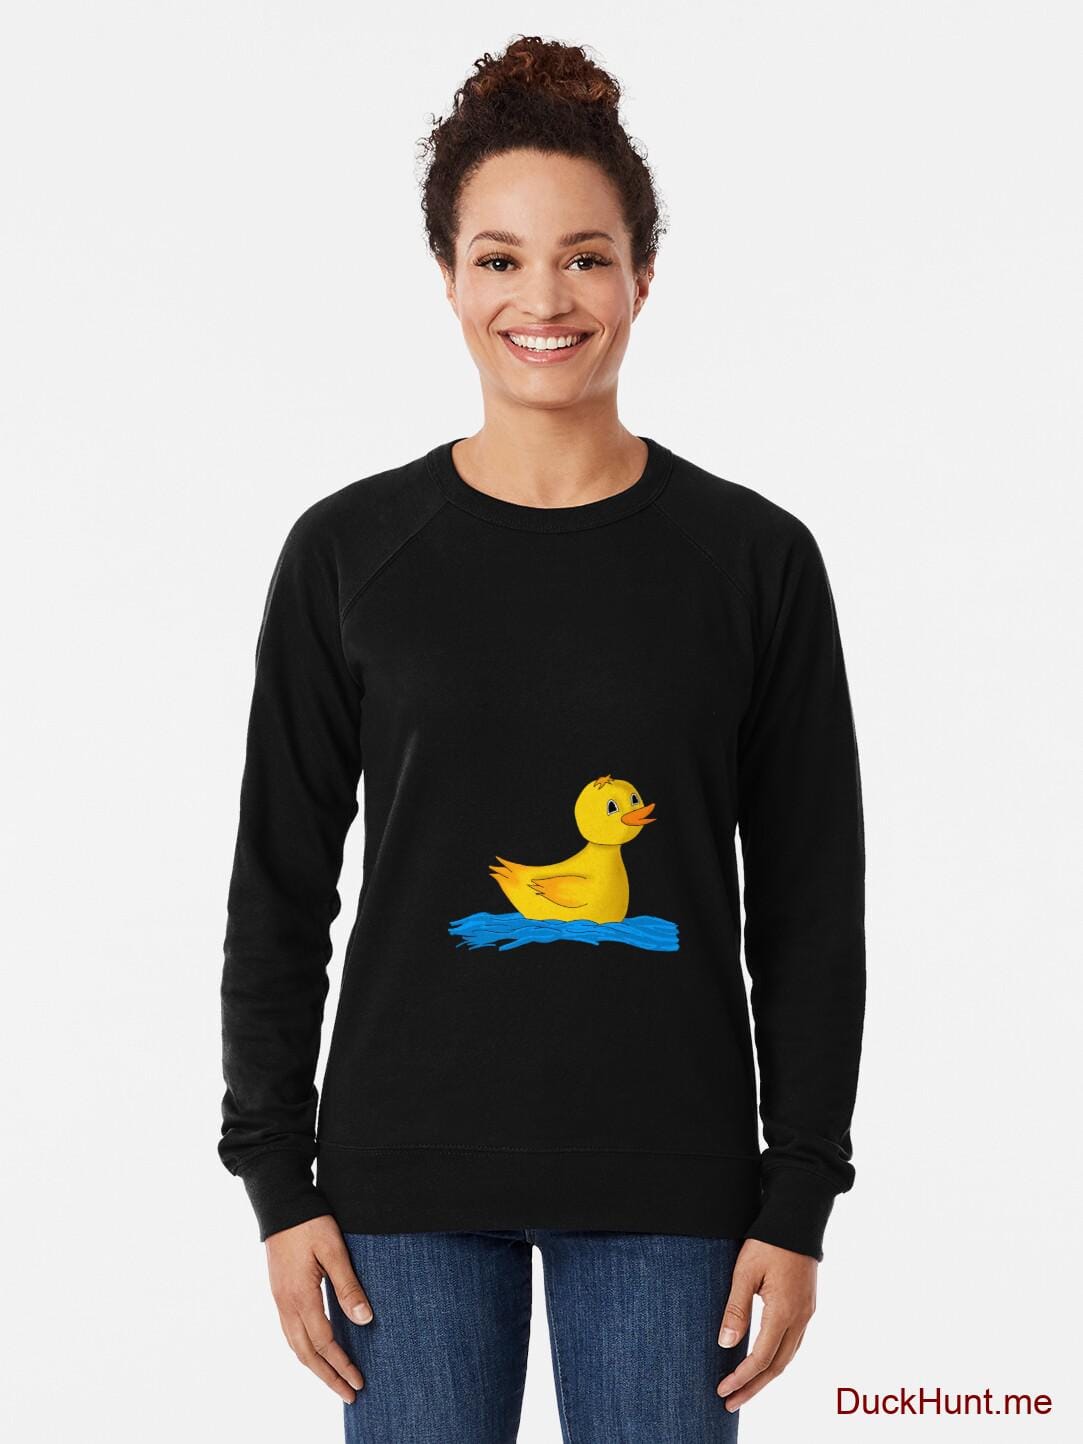 Plastic Duck Black Lightweight Sweatshirt alternative image 1